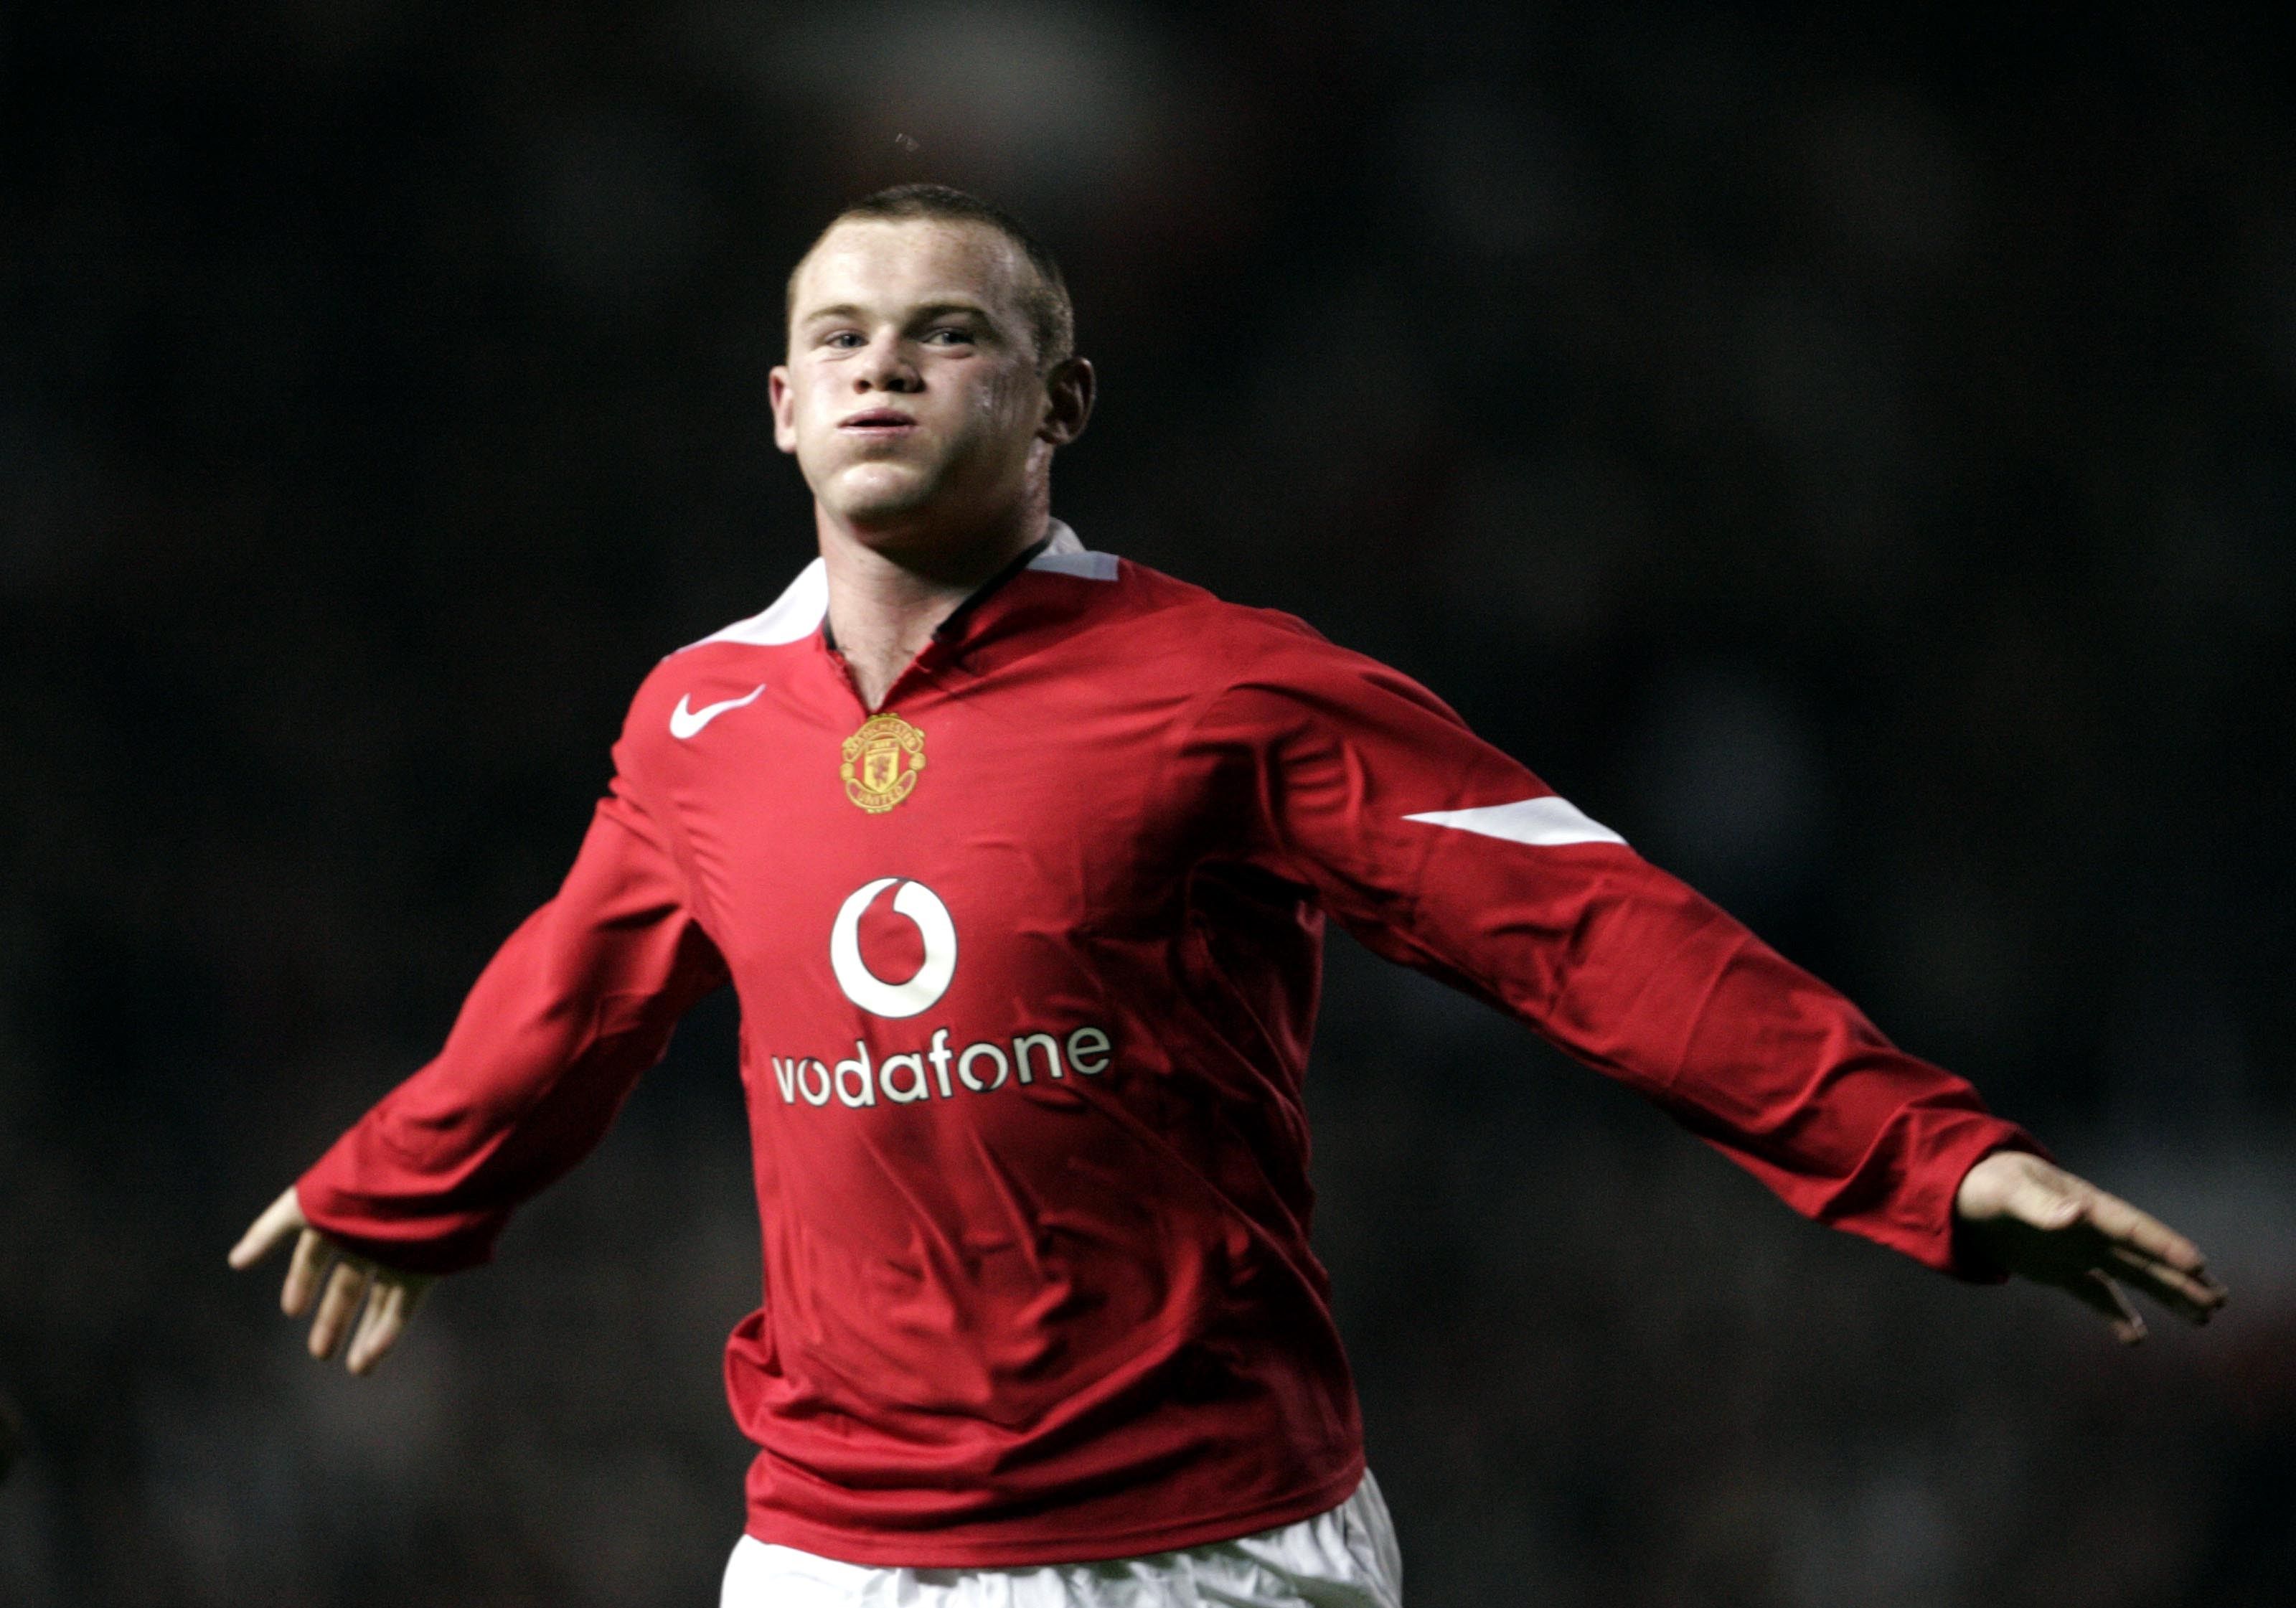 Wayne Rooney scoring for Manchester United